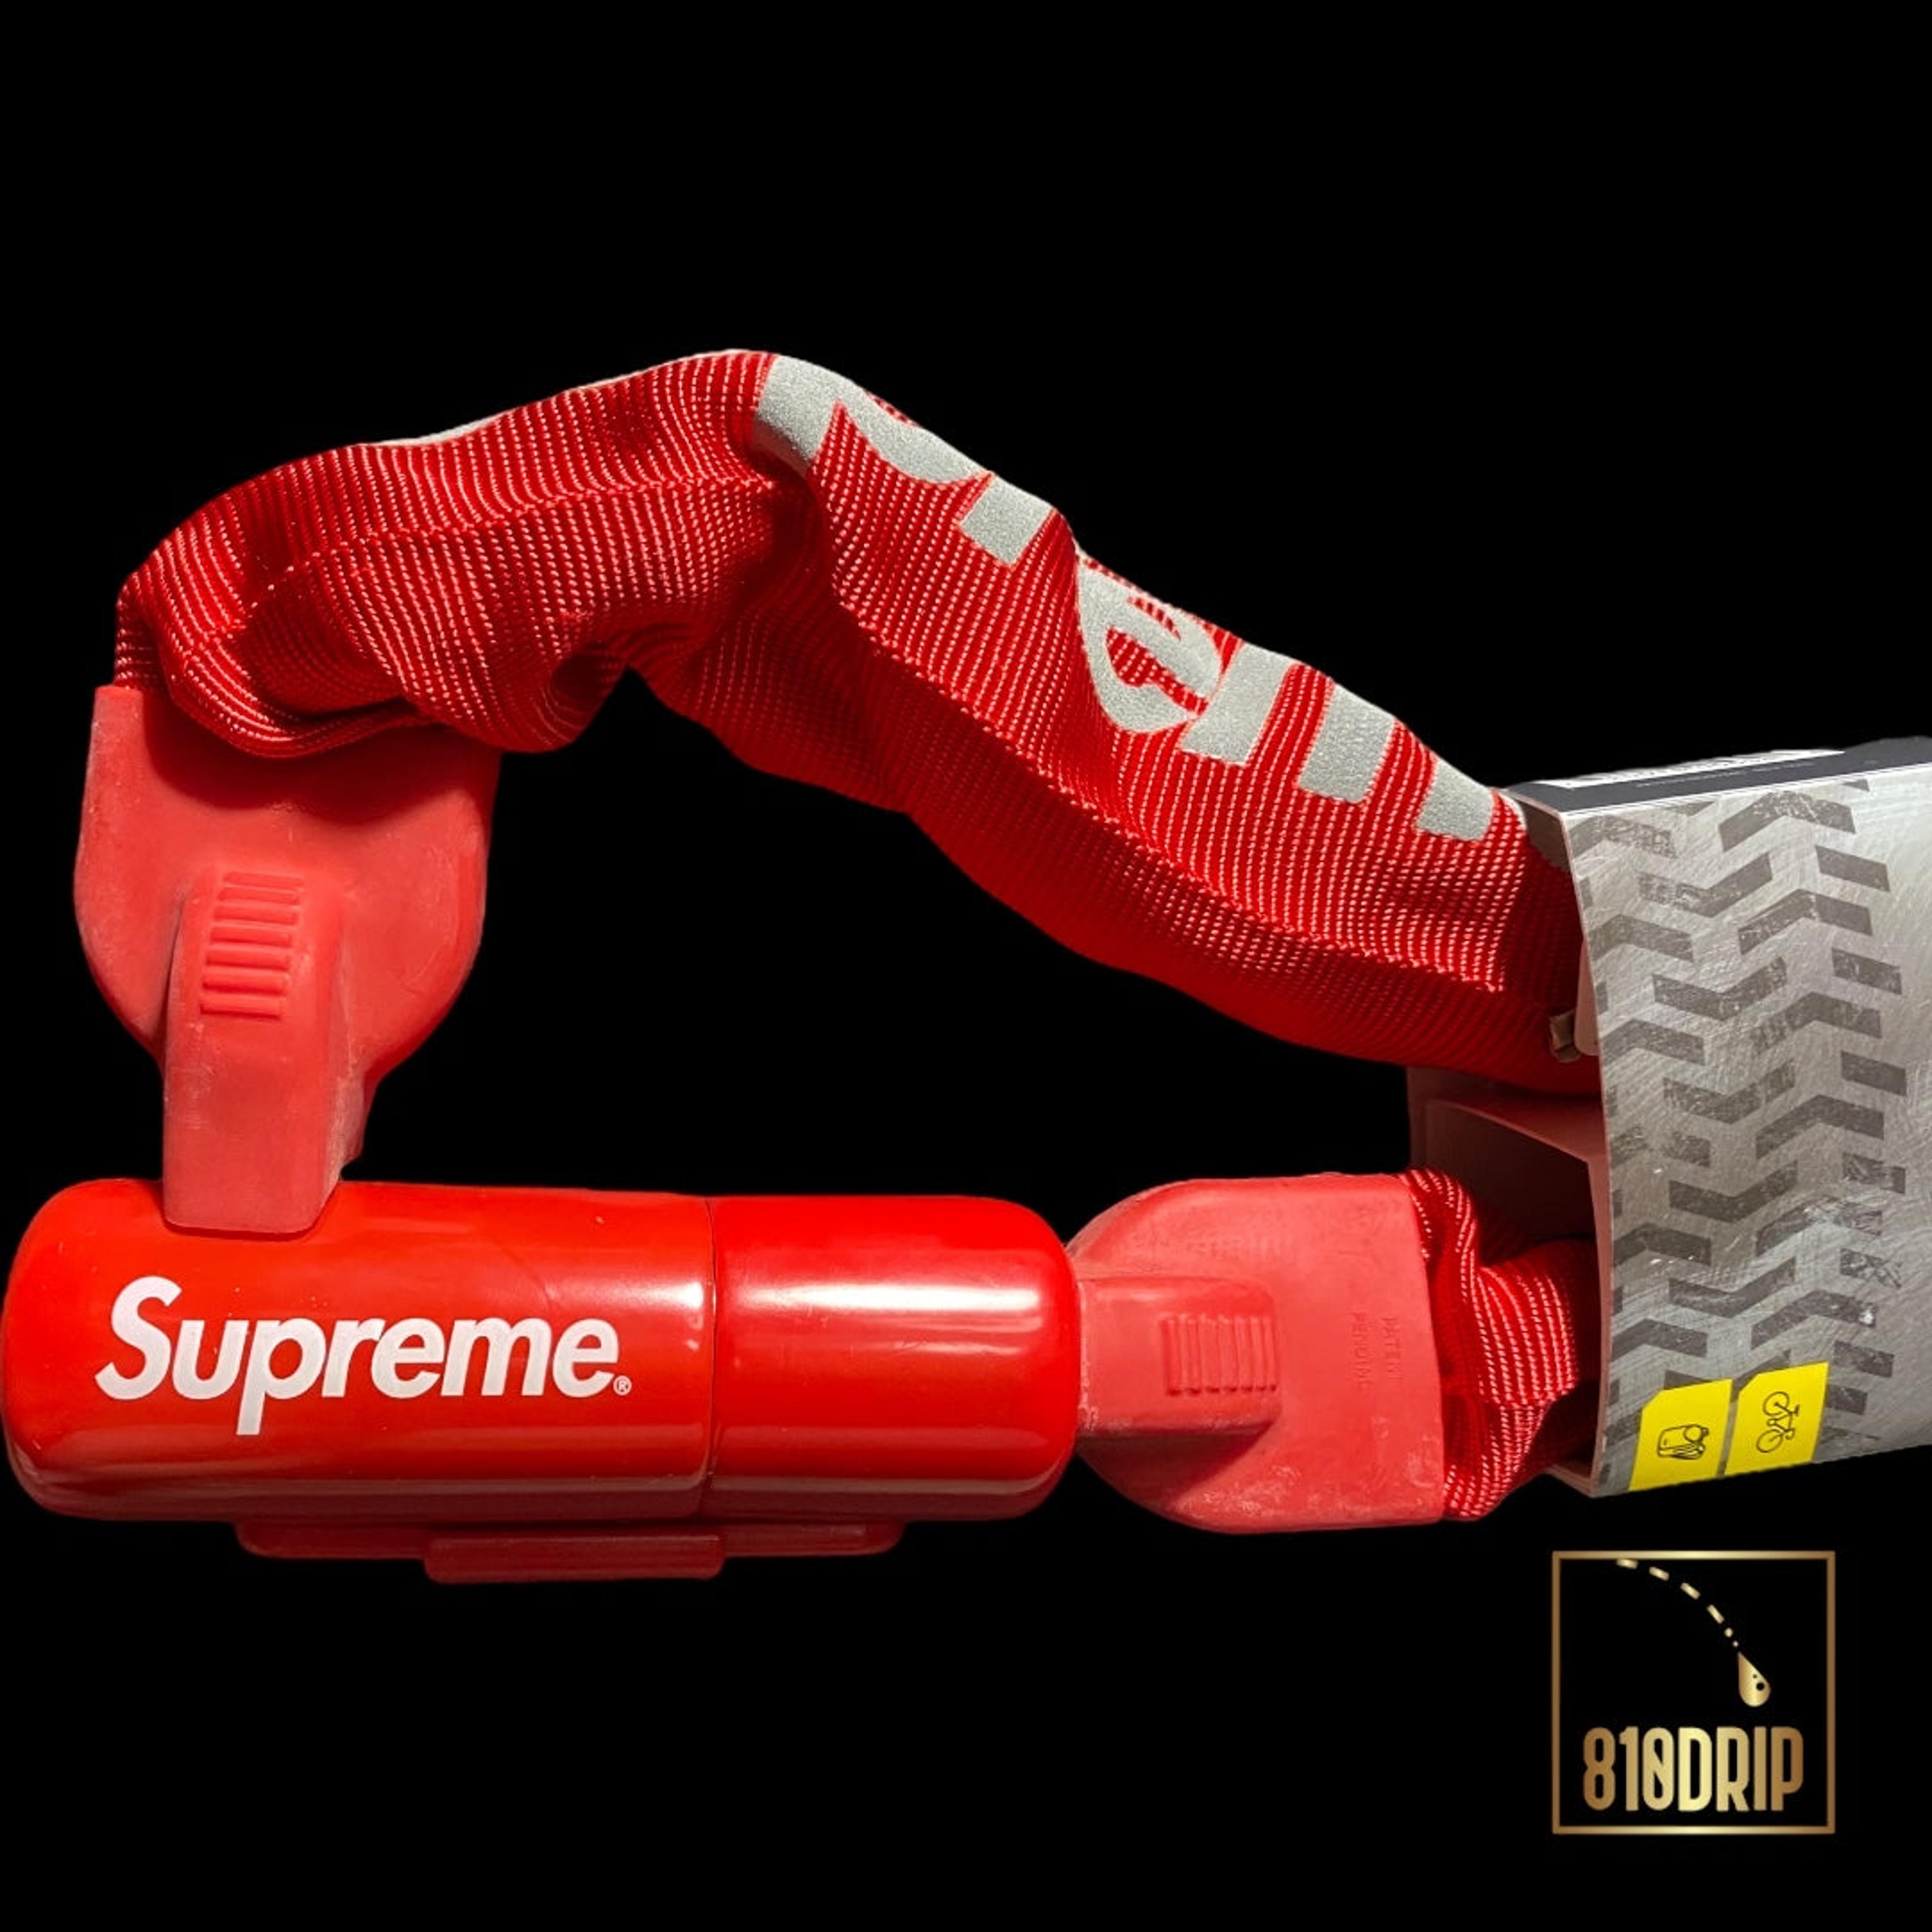 Supreme®/Kryptonite Integrated ChainLock